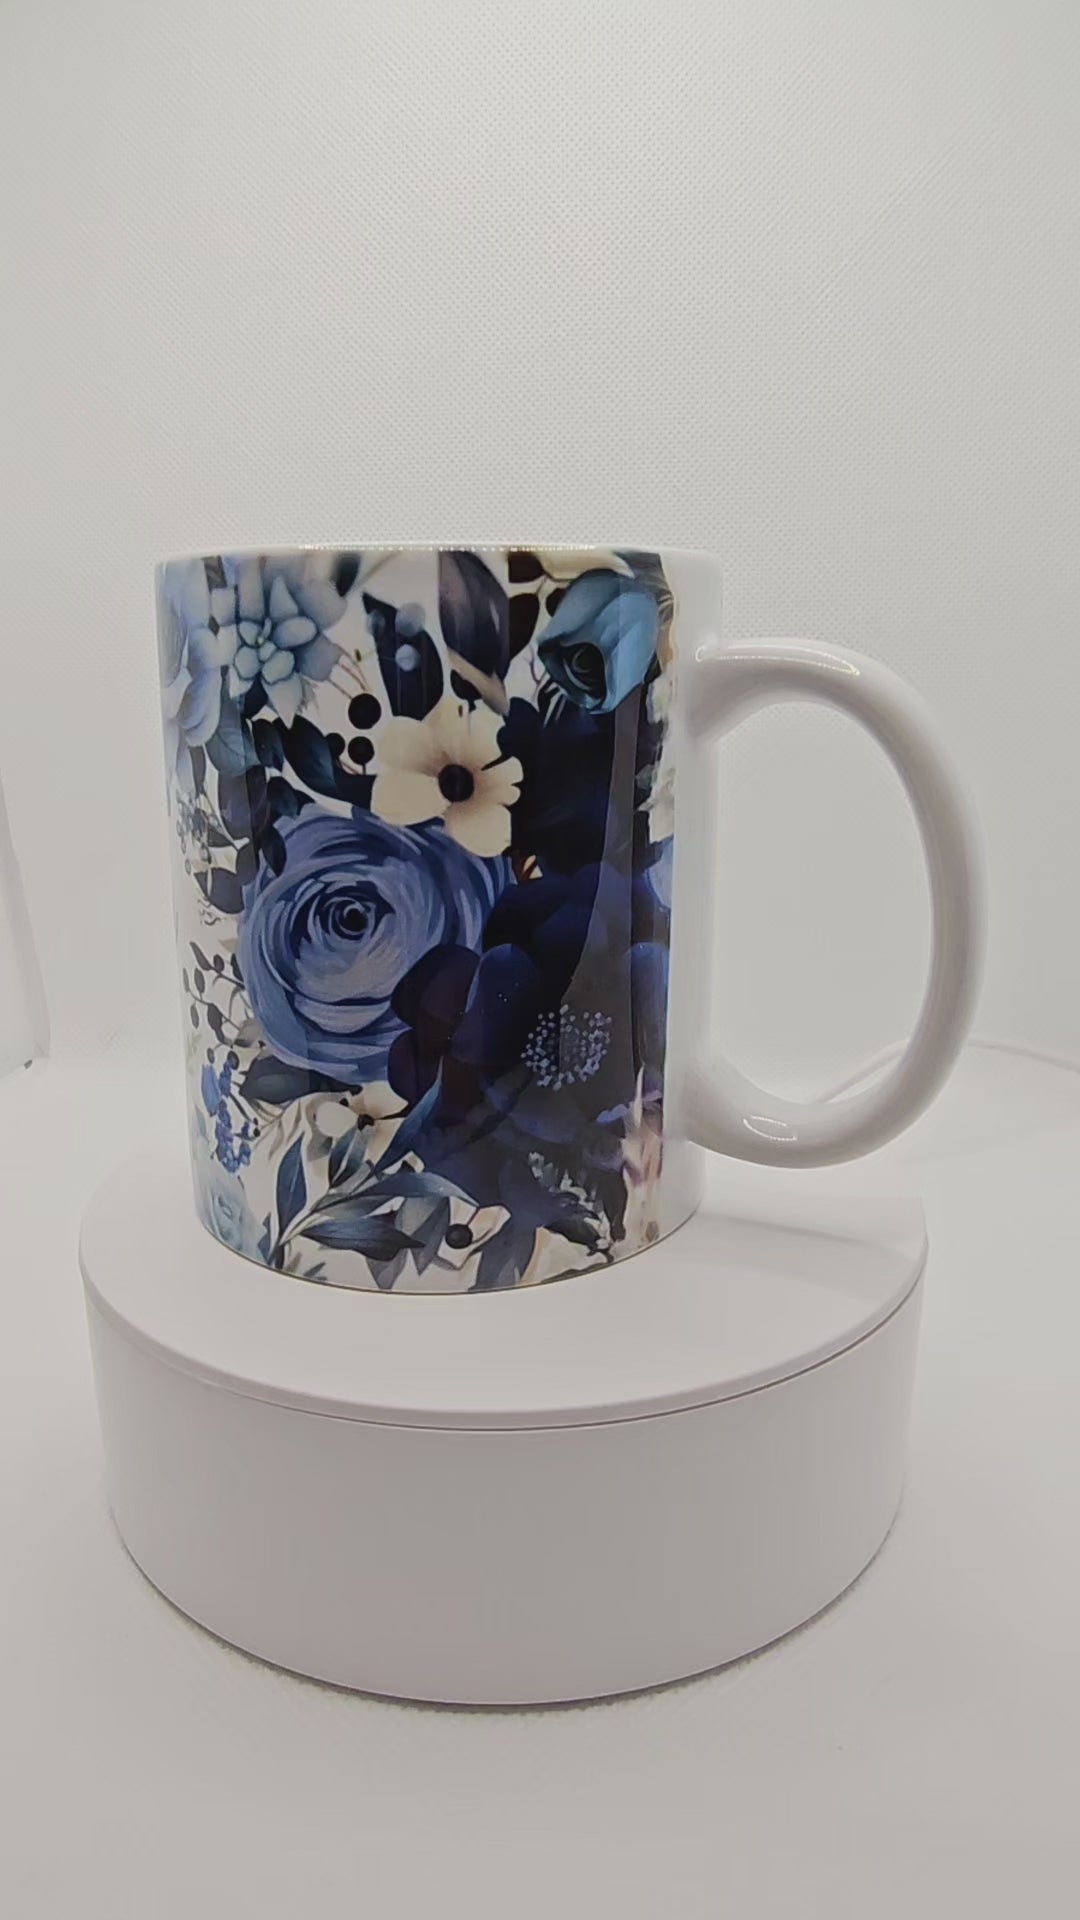 Customizable dark blue flowers coffee mug, personalized coffee mug, customized flower mug, watercolor flowers mug, personalized coffee mug